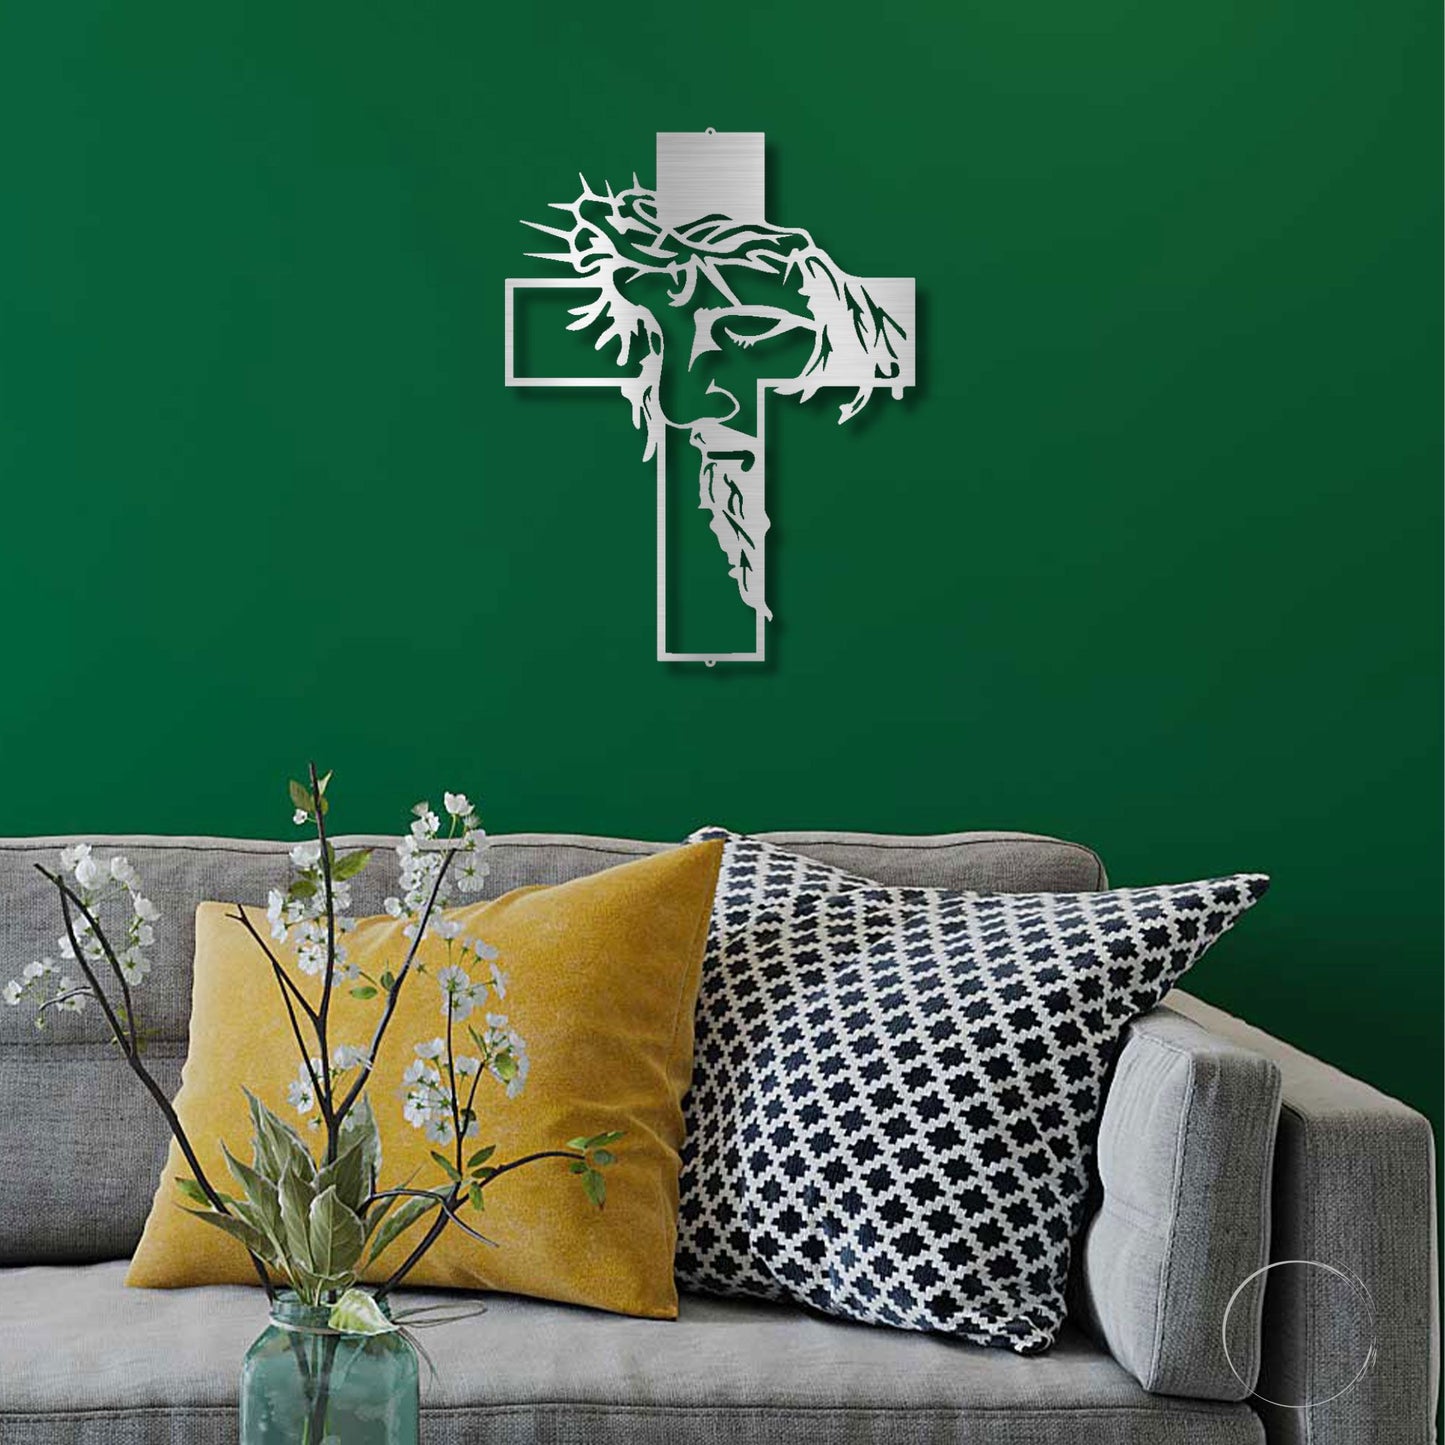 Jesus Christ with Crown of Thorns on Cross Metal Wall Art